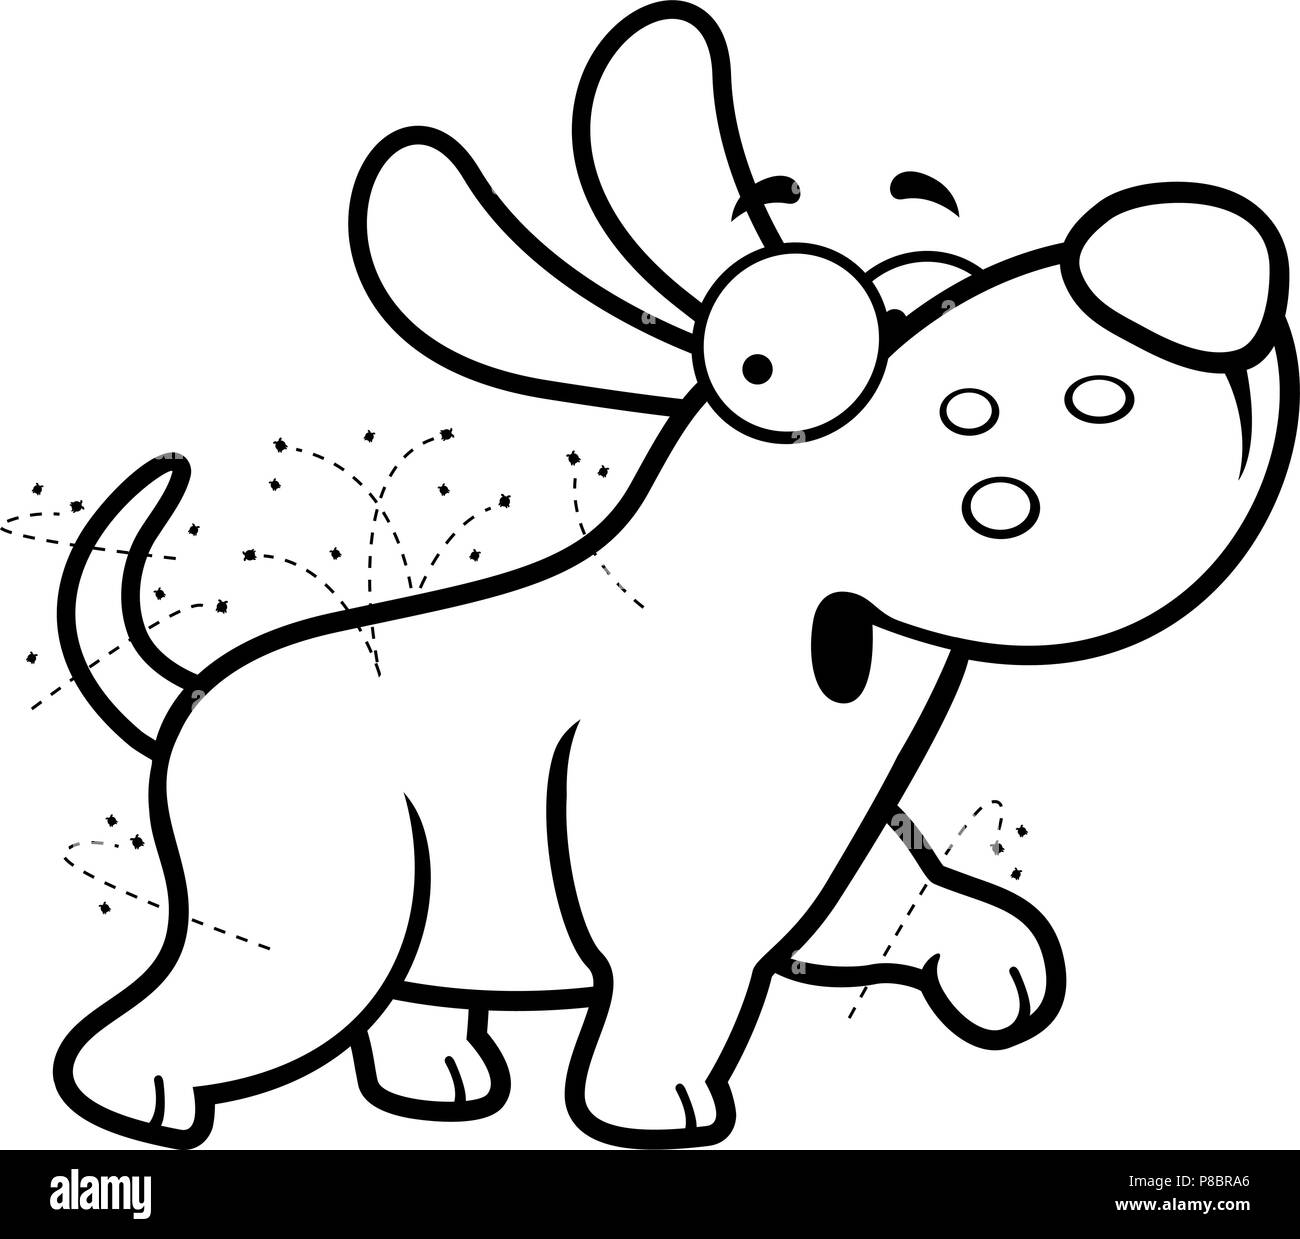 A cartoon illustration of a dog with fleas. Stock Vector